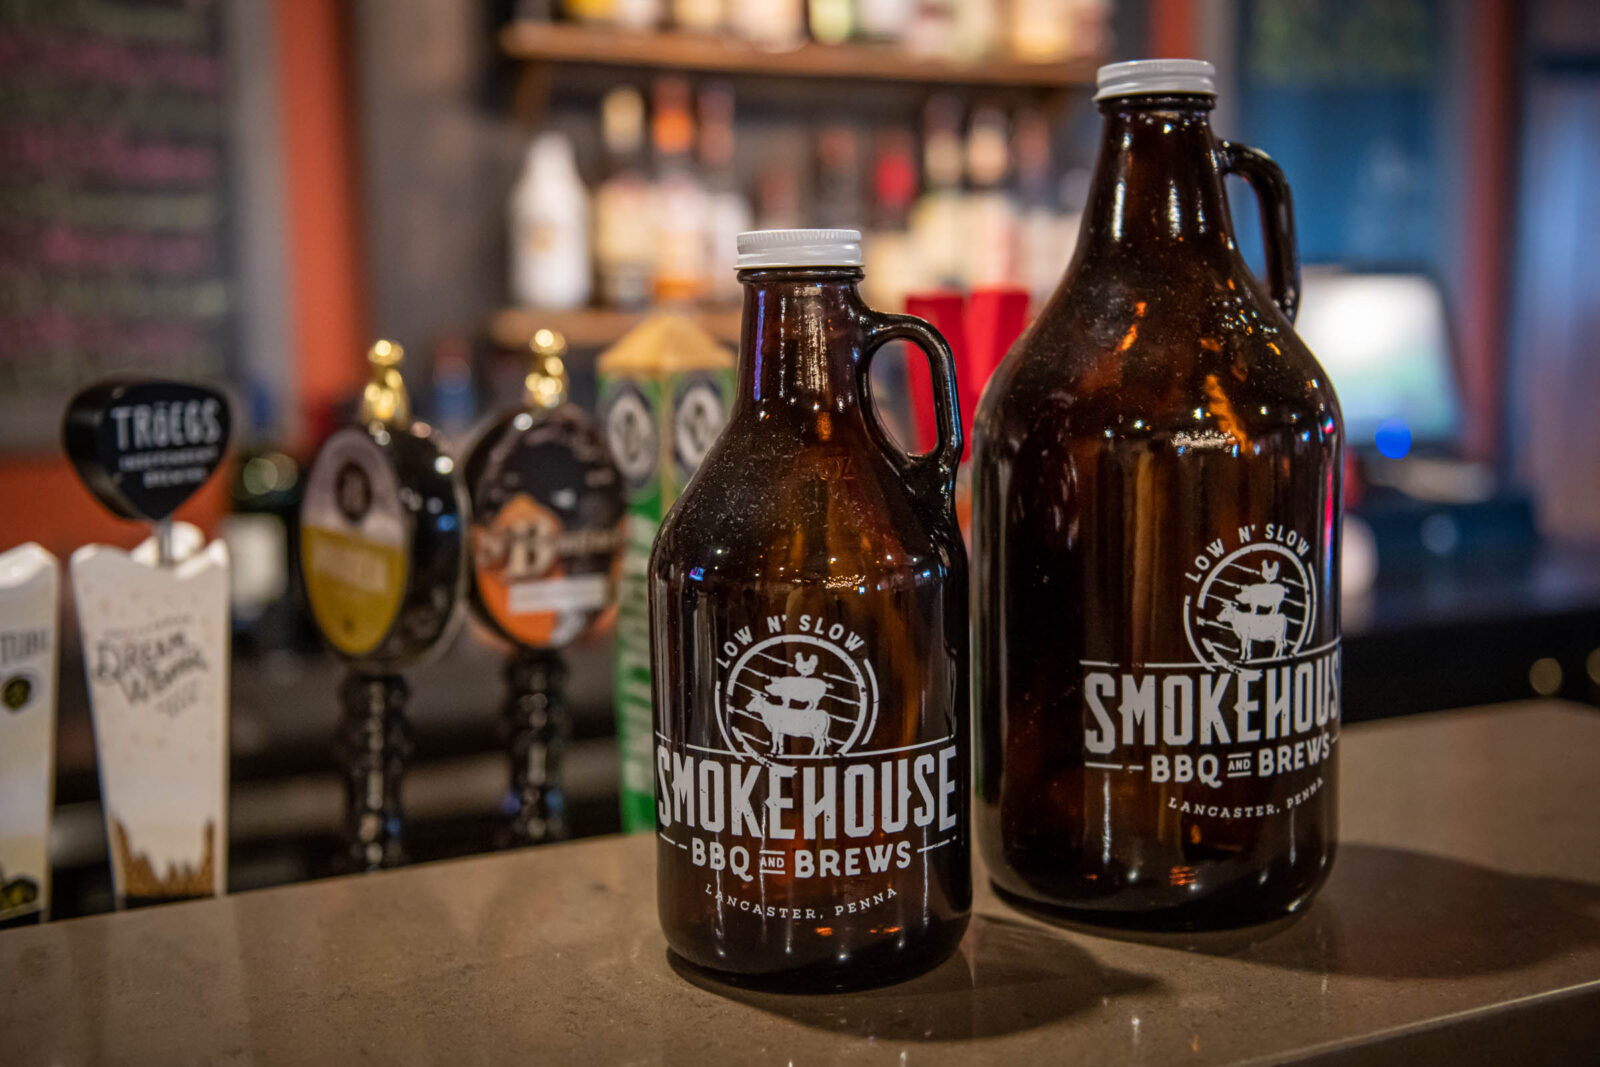 Growler Bottles at Smokehouse BBQ & Brews in Lancaster County PA